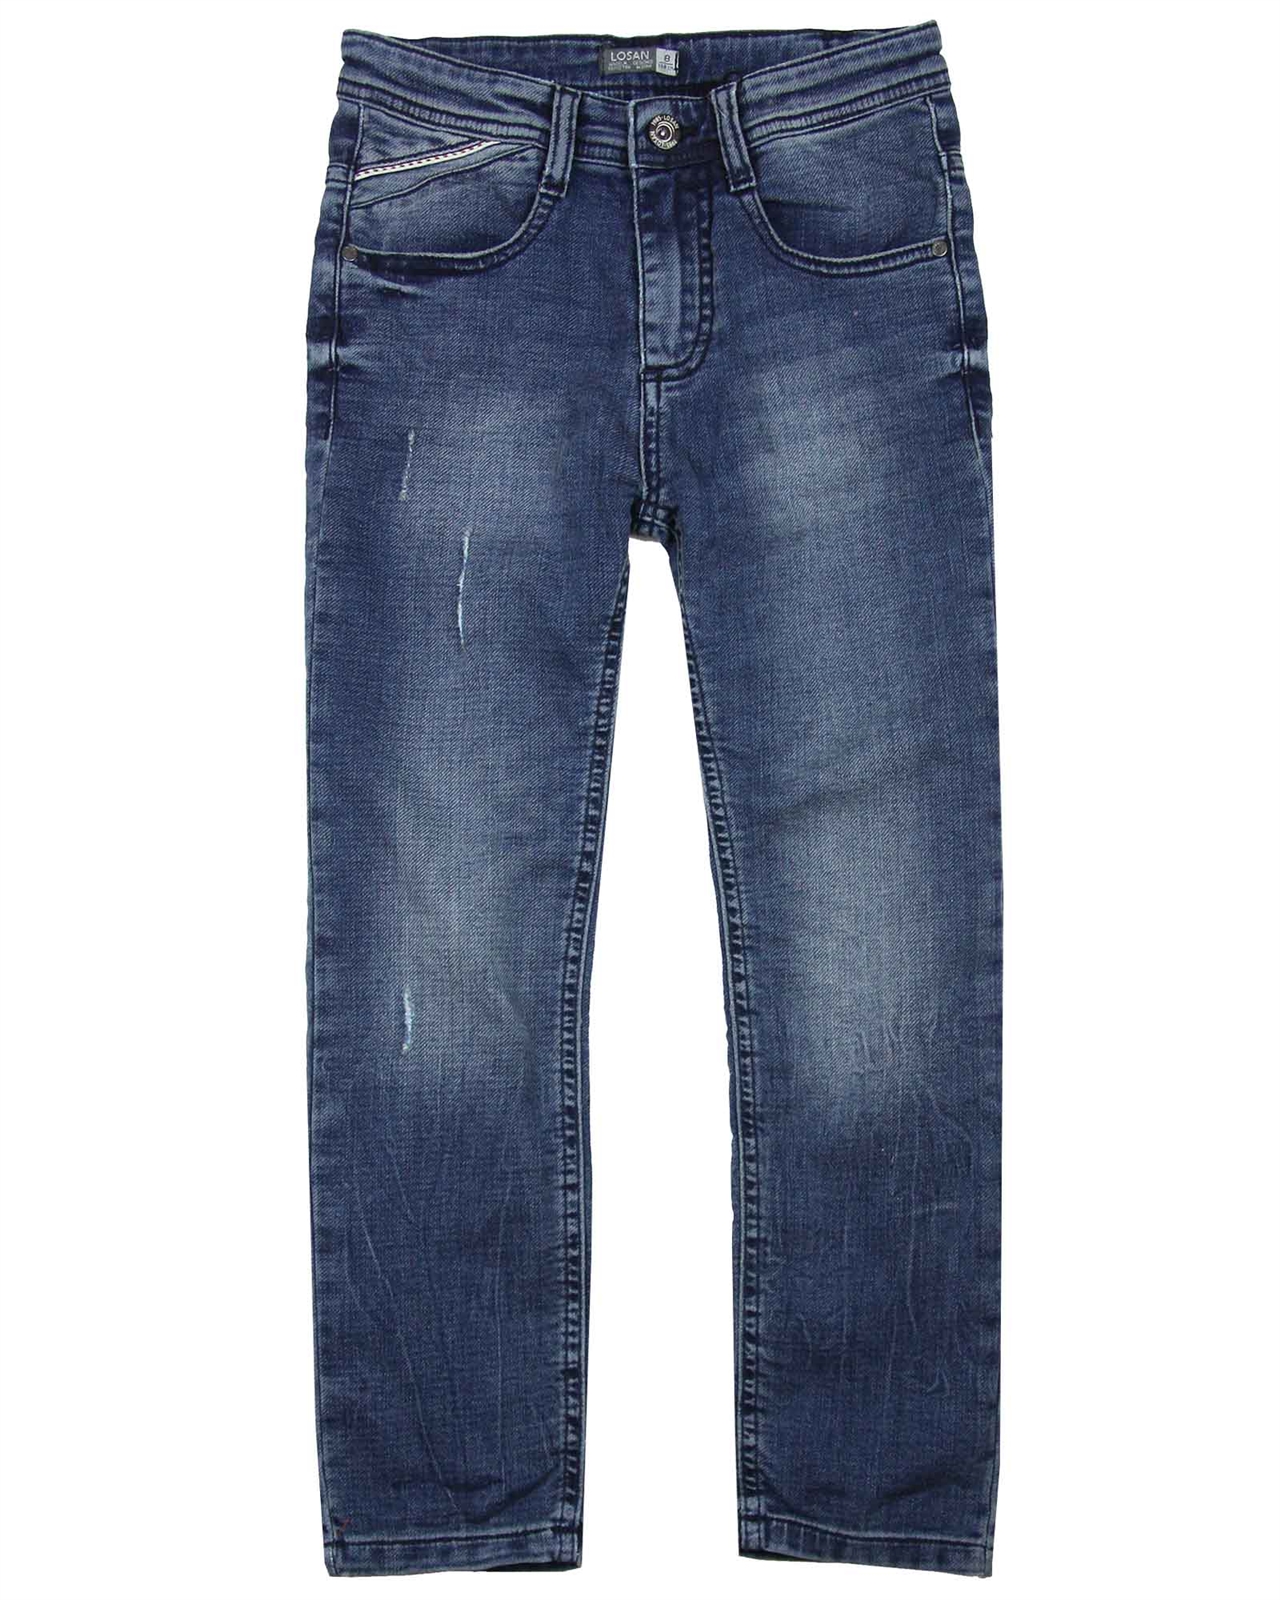 LOSAN Junior Boy/'s Jogg Jeans in Medium Blue Sizes 8-16